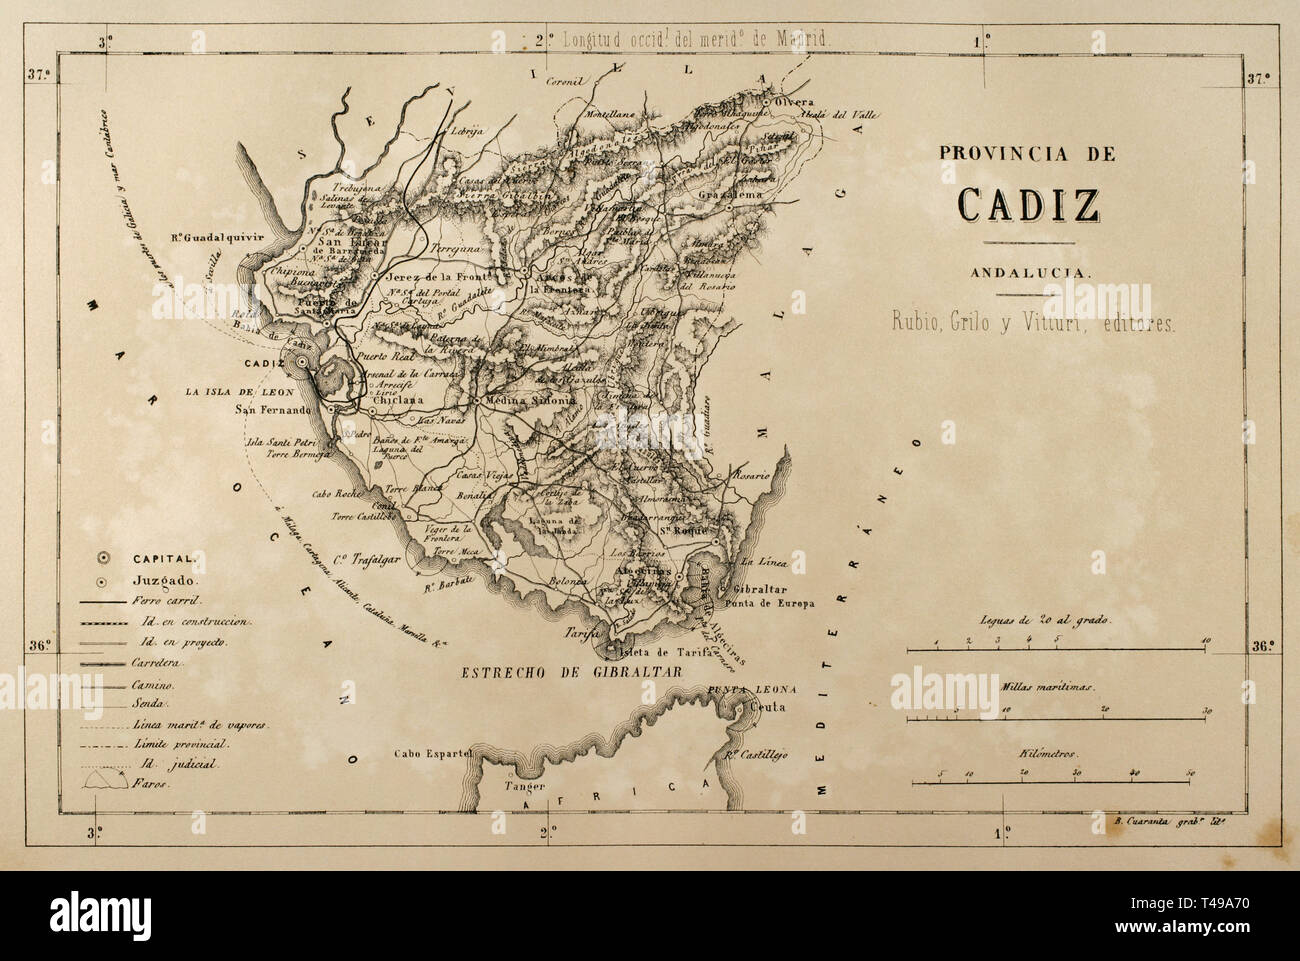 Map of the Cadiz province, Andalusia, Spain. Cronica General de España, Historia Ilustrada y Descriptiva de sus Provincias. Andalucia, 1867. Stock Photo